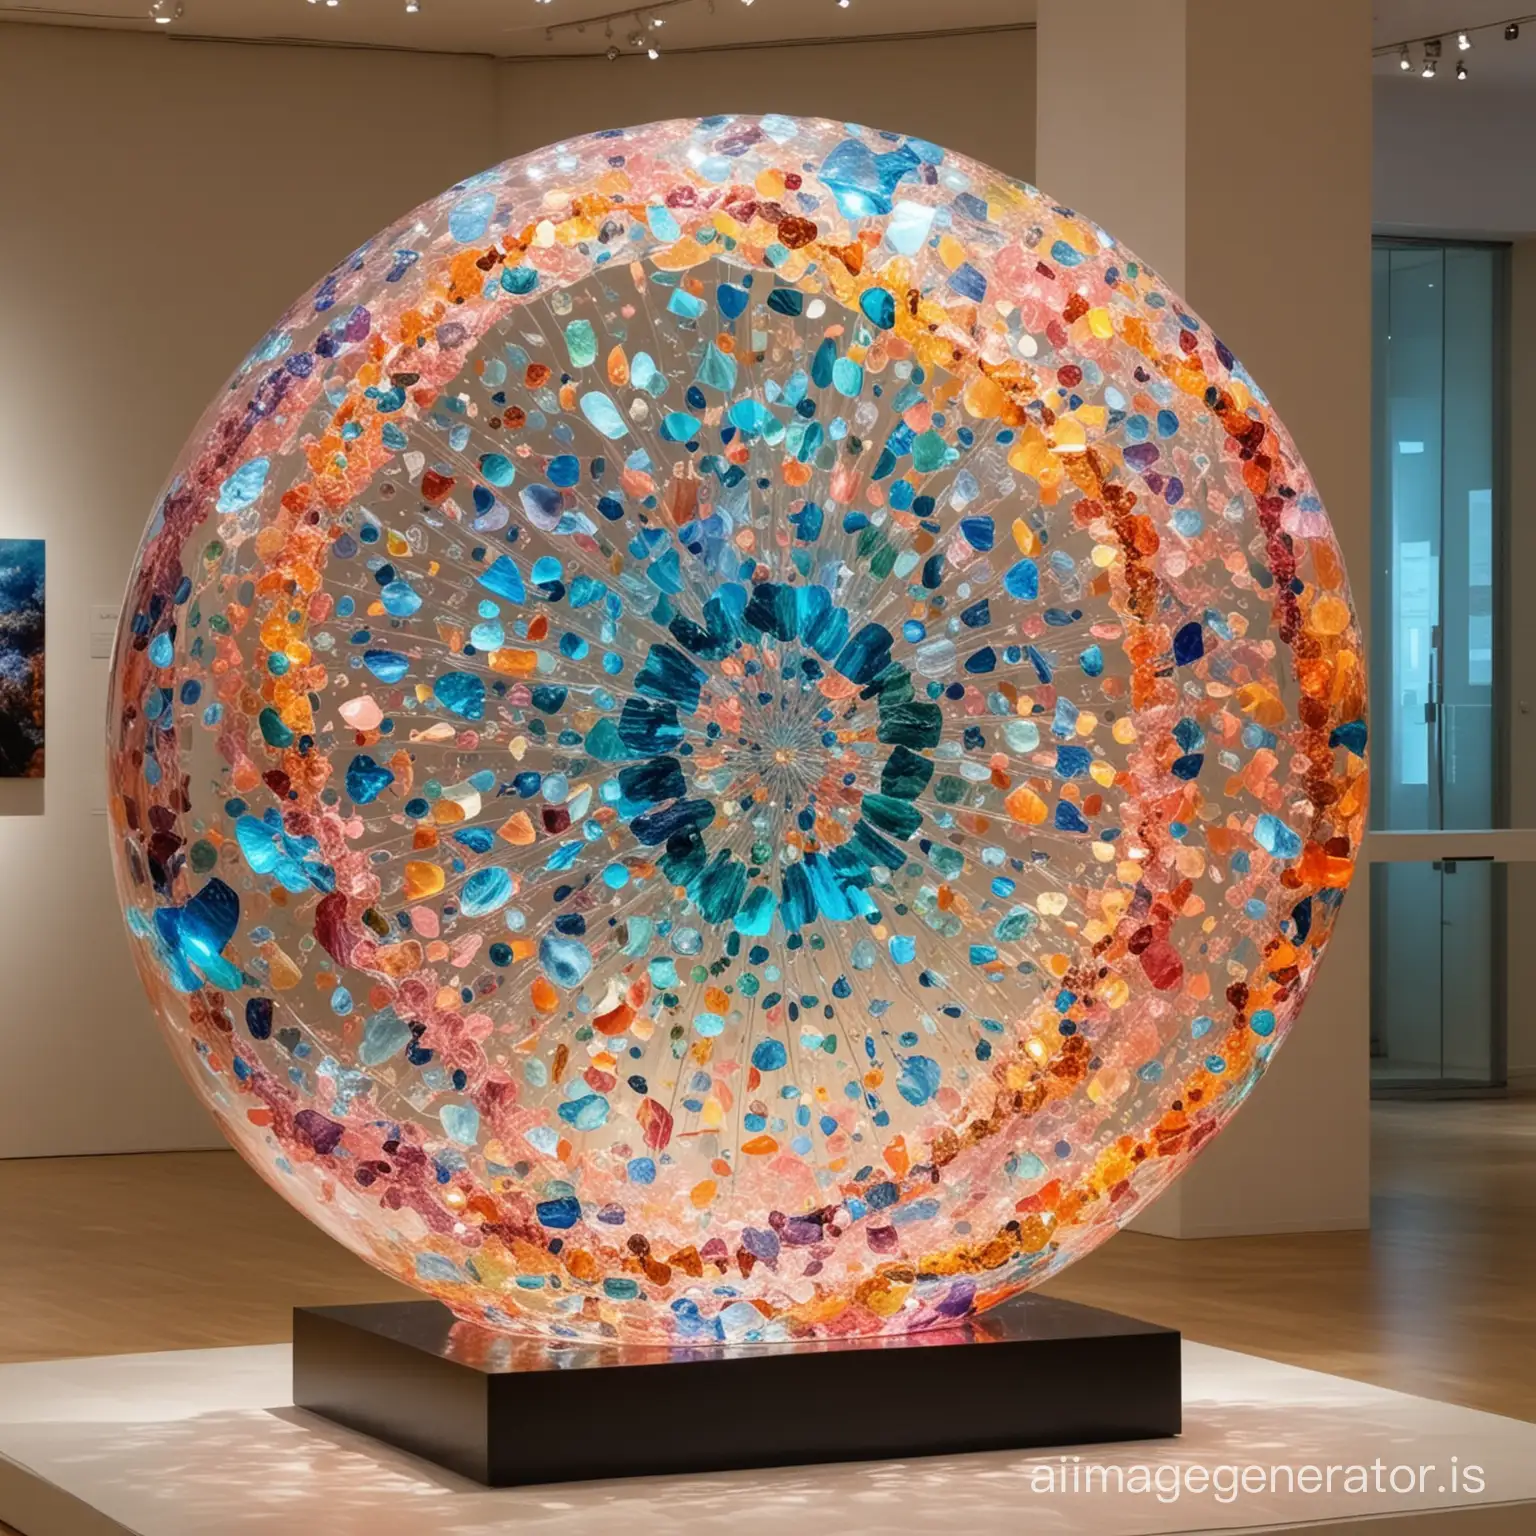 Vibrant-Opal-Glass-Sculpture-Illuminated-in-Art-Gallery